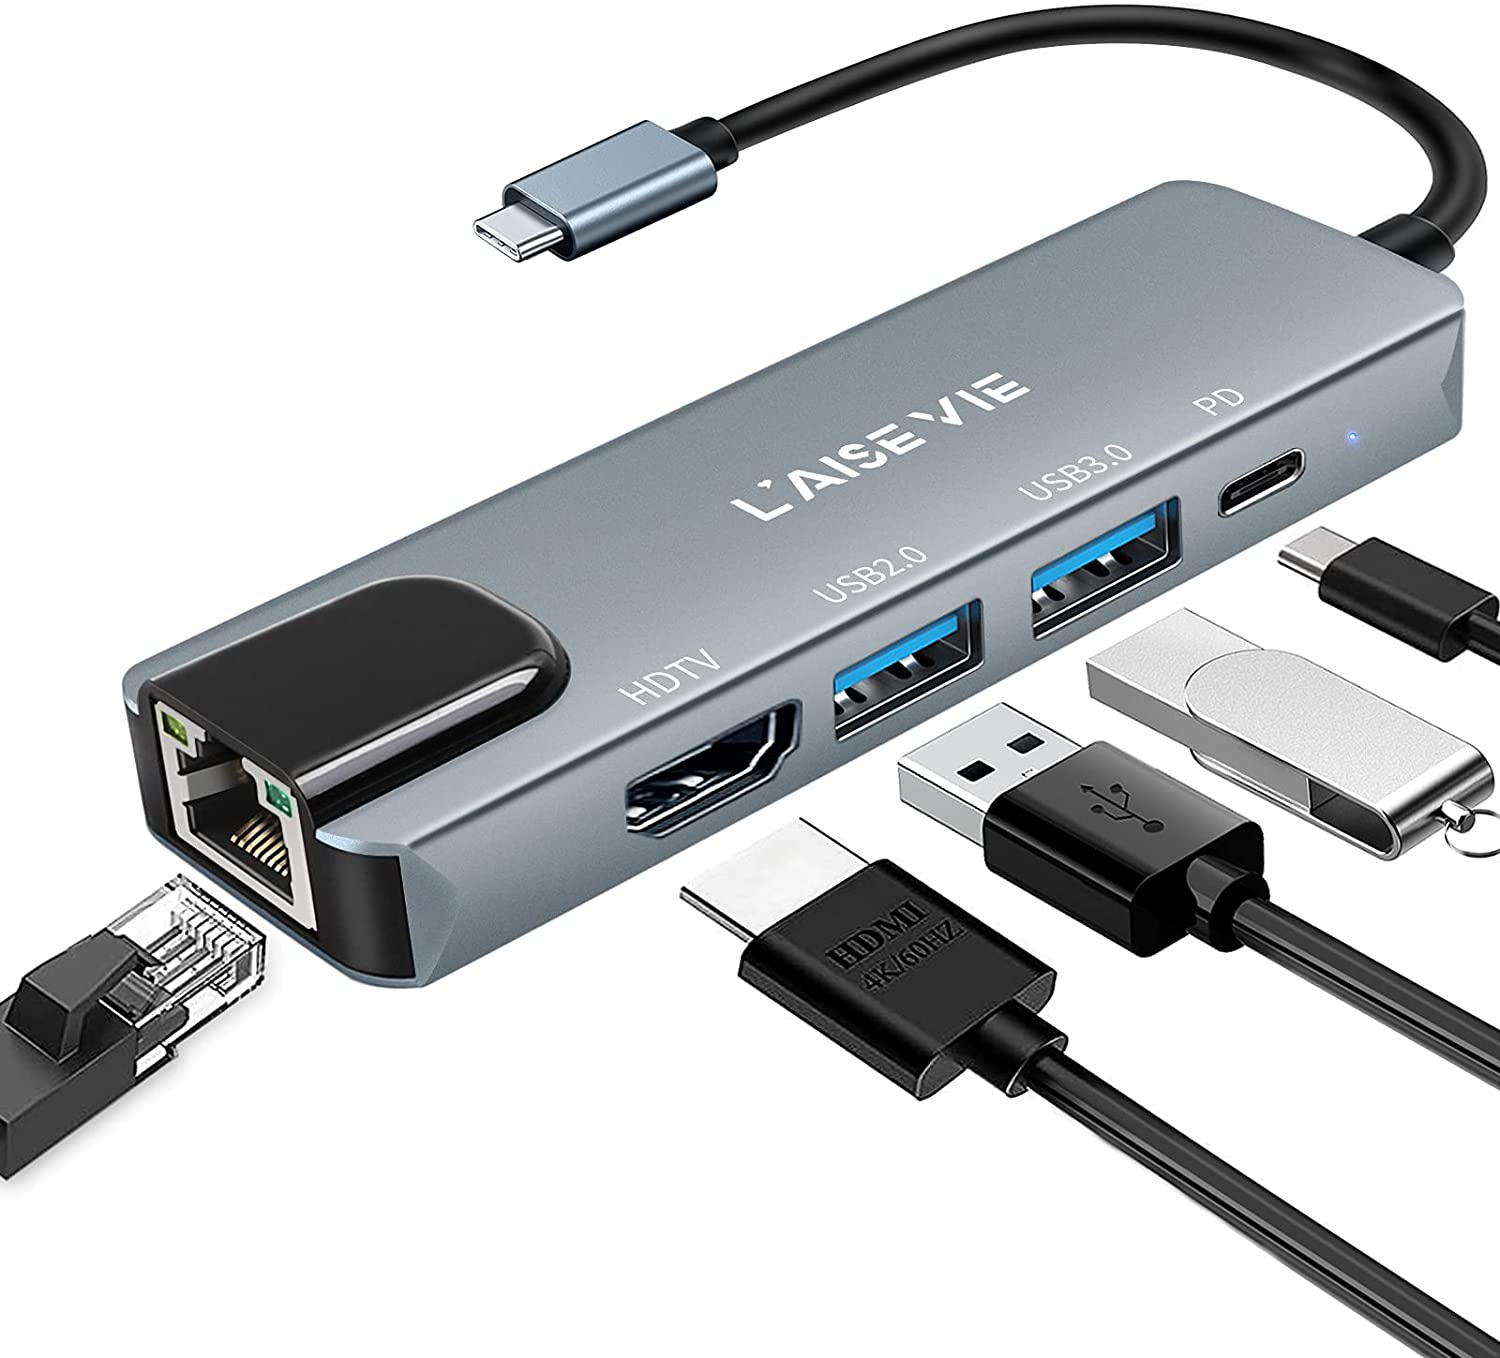 Laise vie 5 Ports USB Hub - Grey